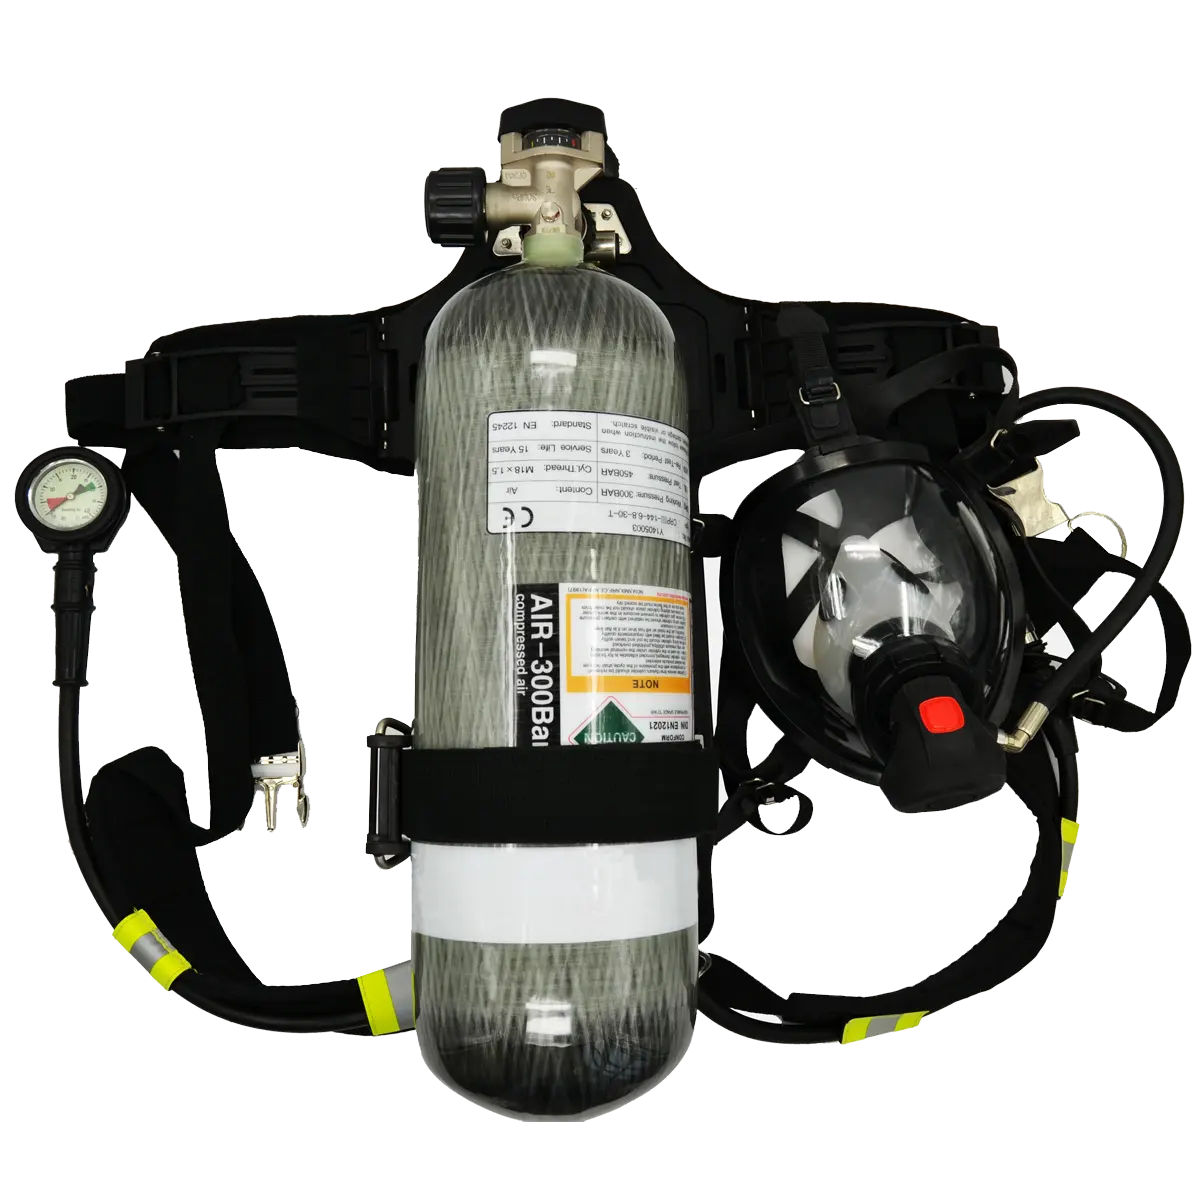 Appareil respiratoire autonome SCBA pour pompier